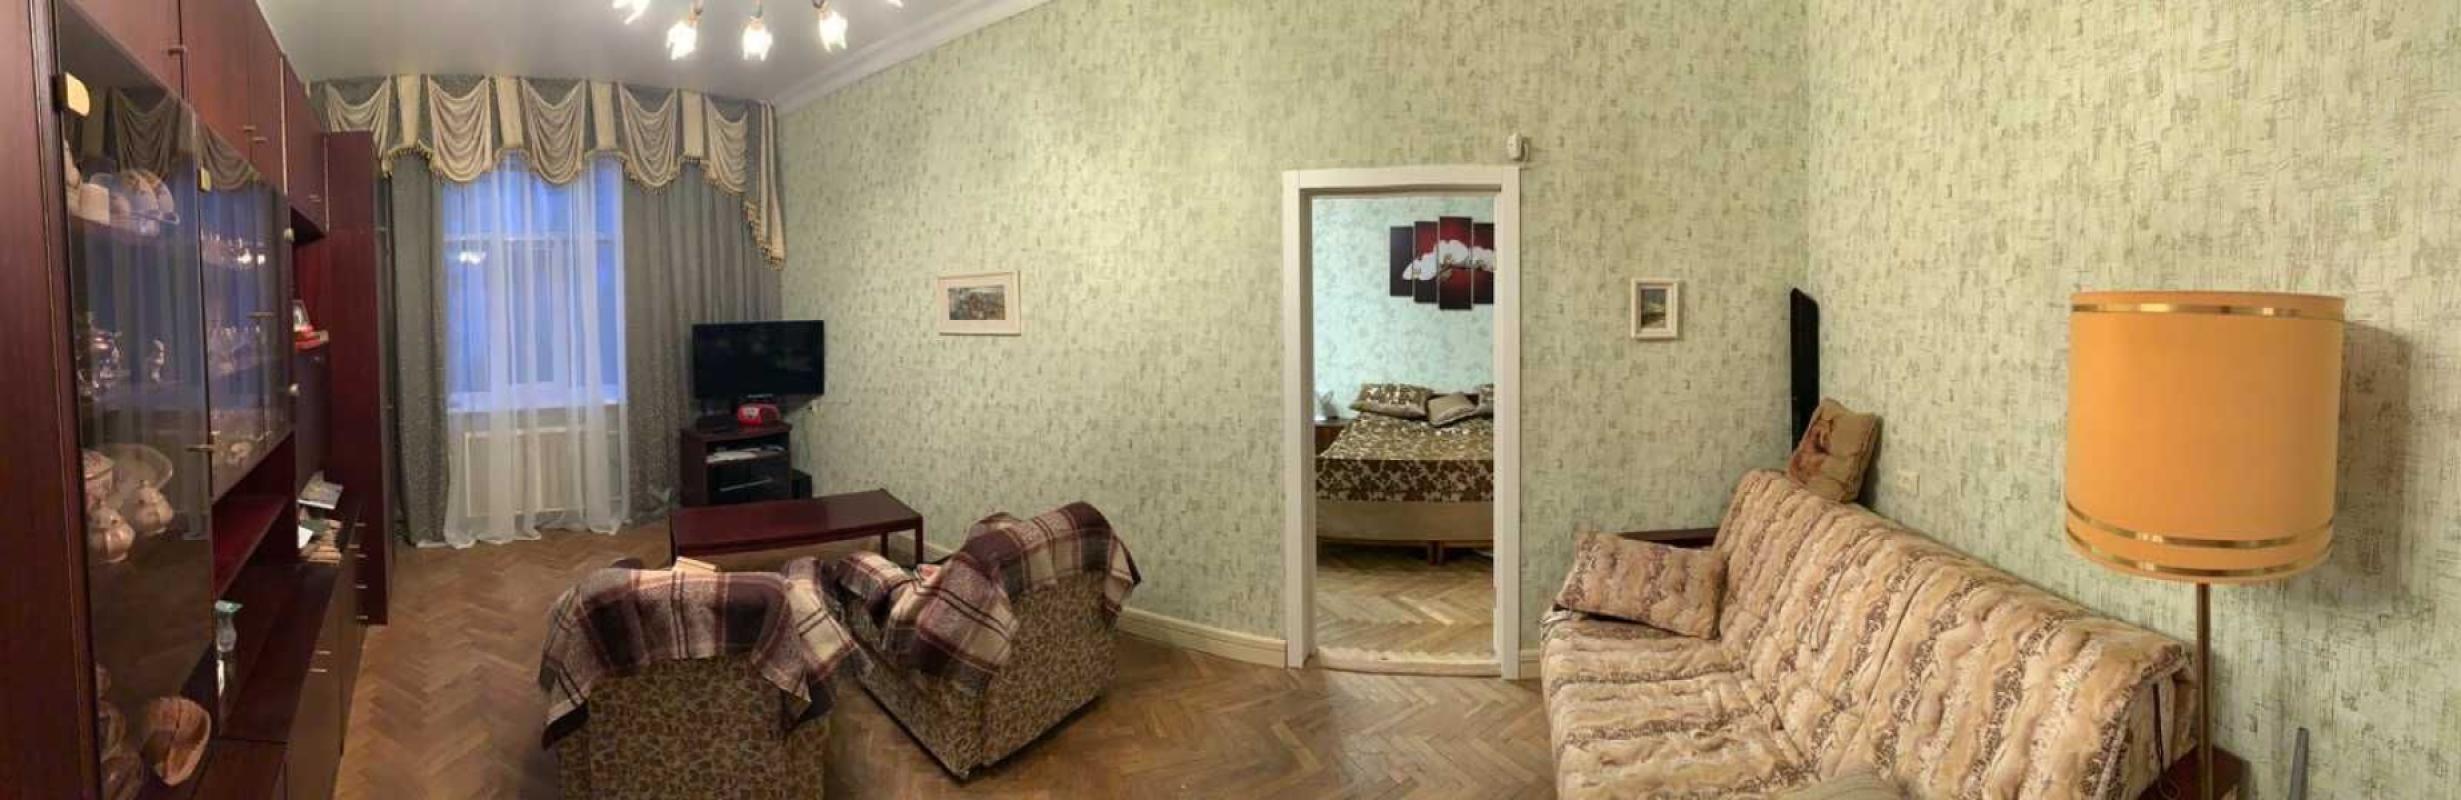 Долгосрочная аренда 3 комнатной квартиры ул. Дмитрия Дорошенко (Чигорина) 49